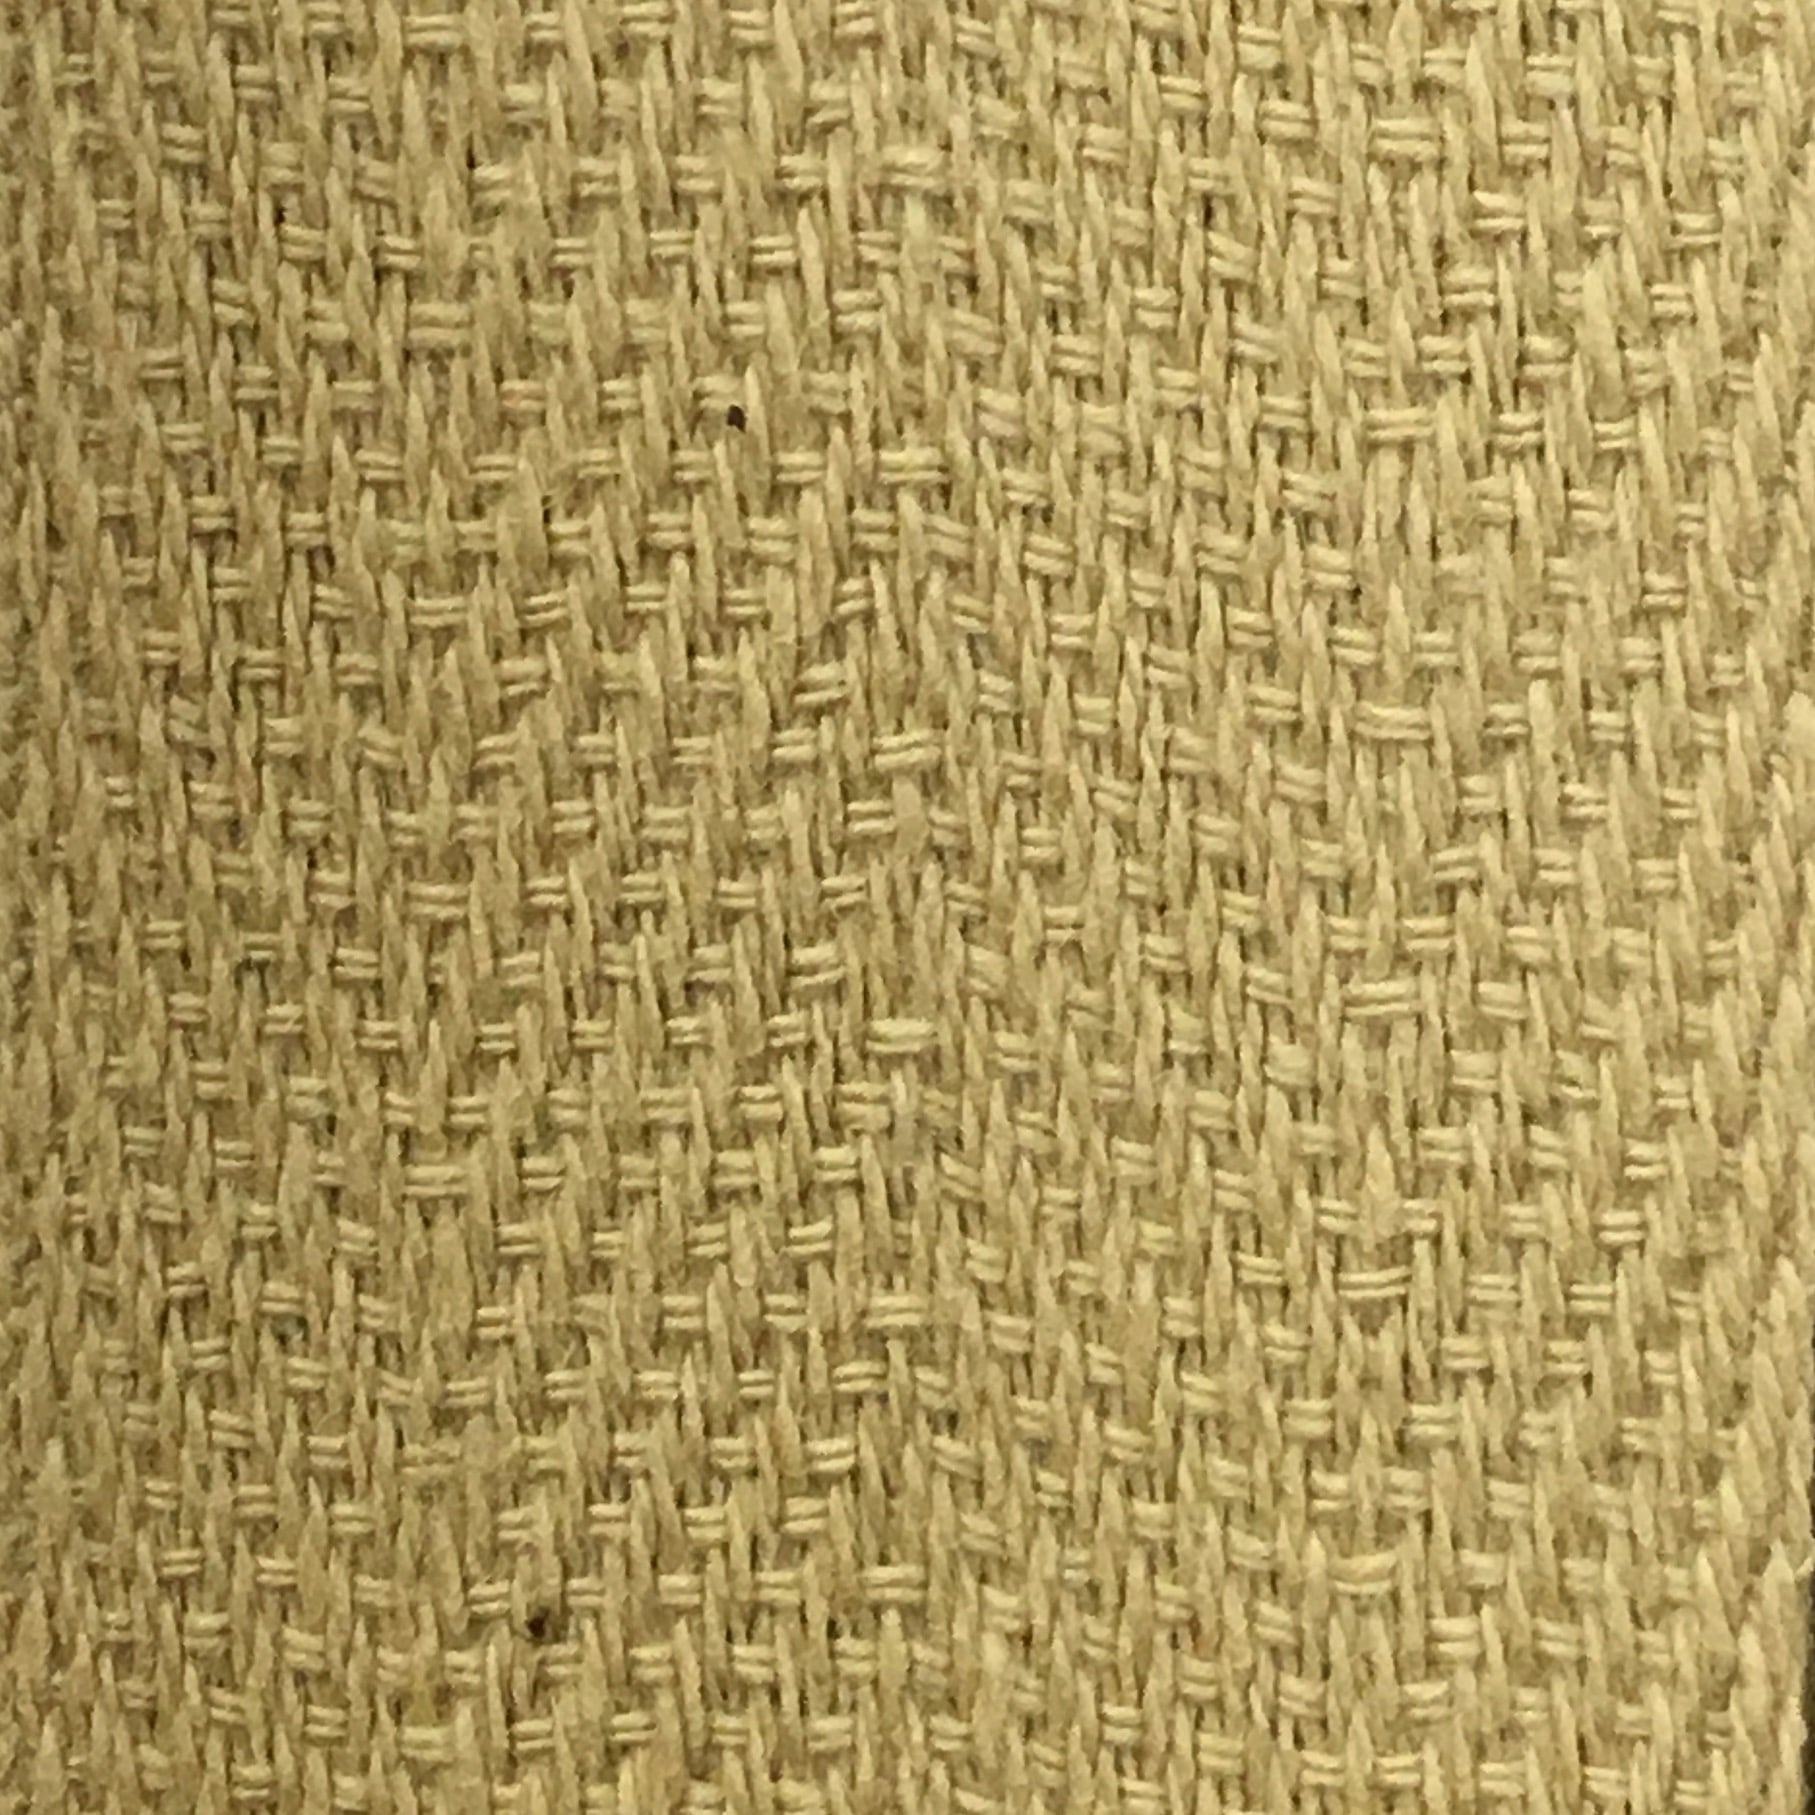 Instabind Regular Carpet Binding in Light Tan